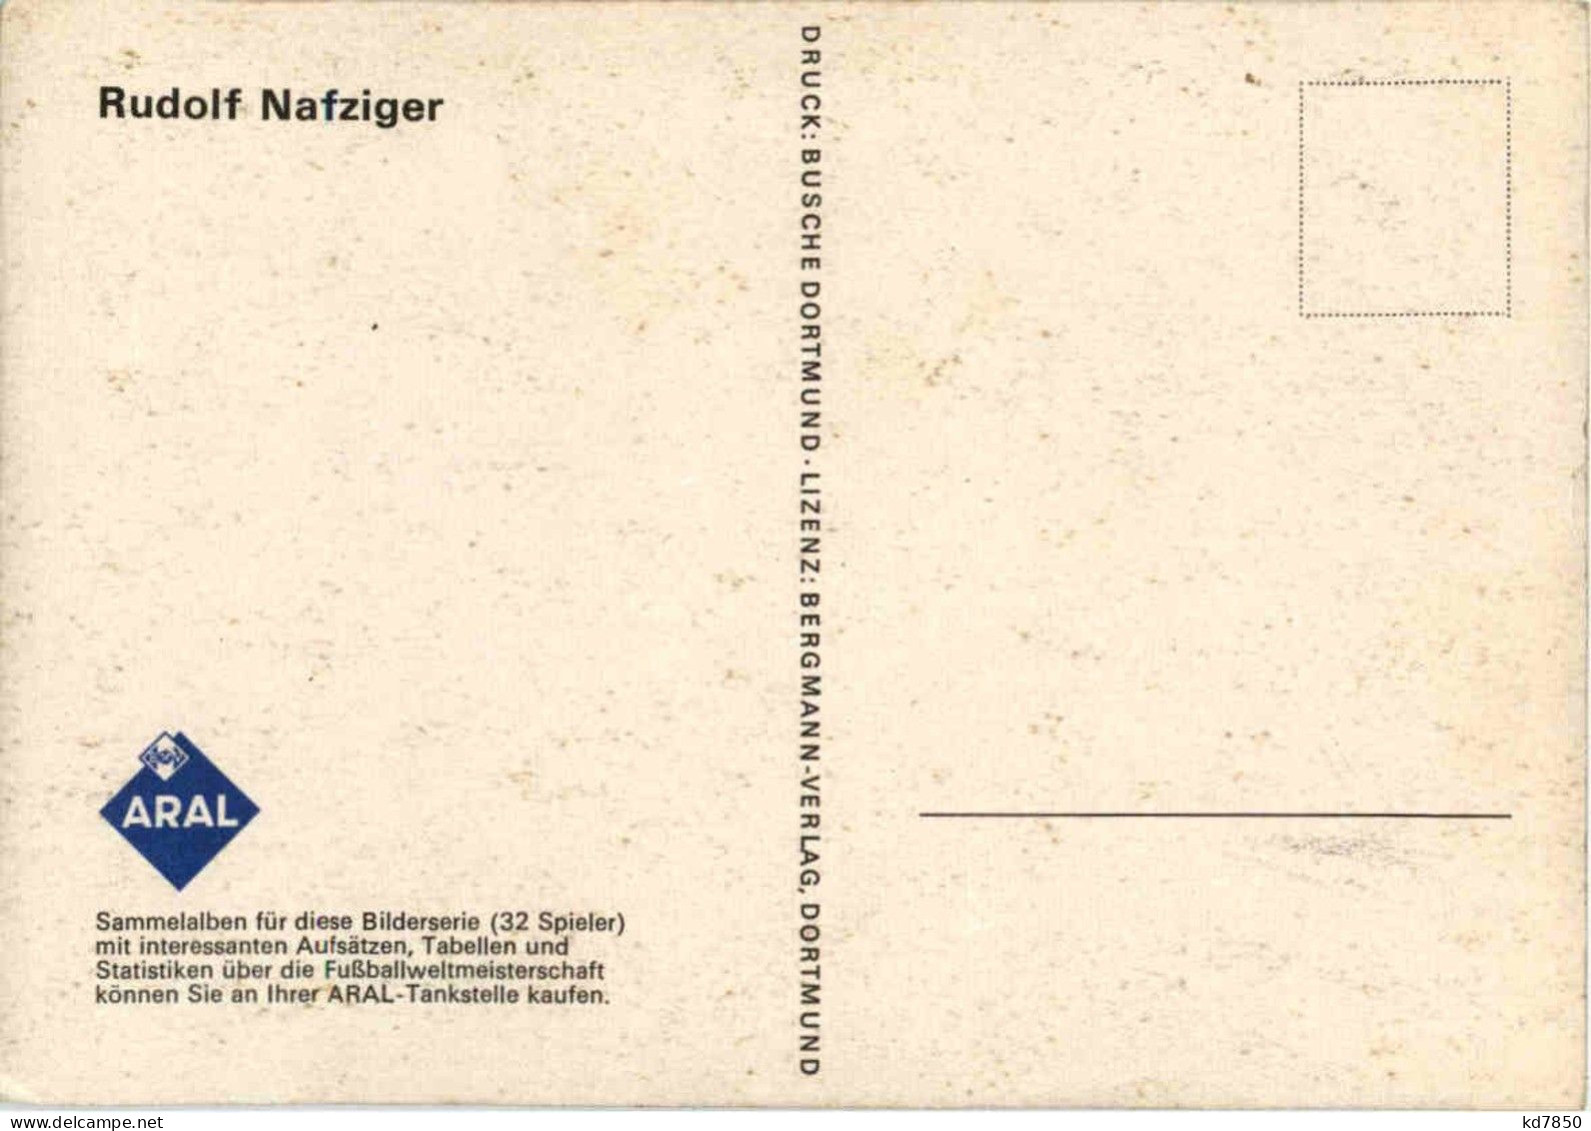 Rudolf Nafziger - Soccer